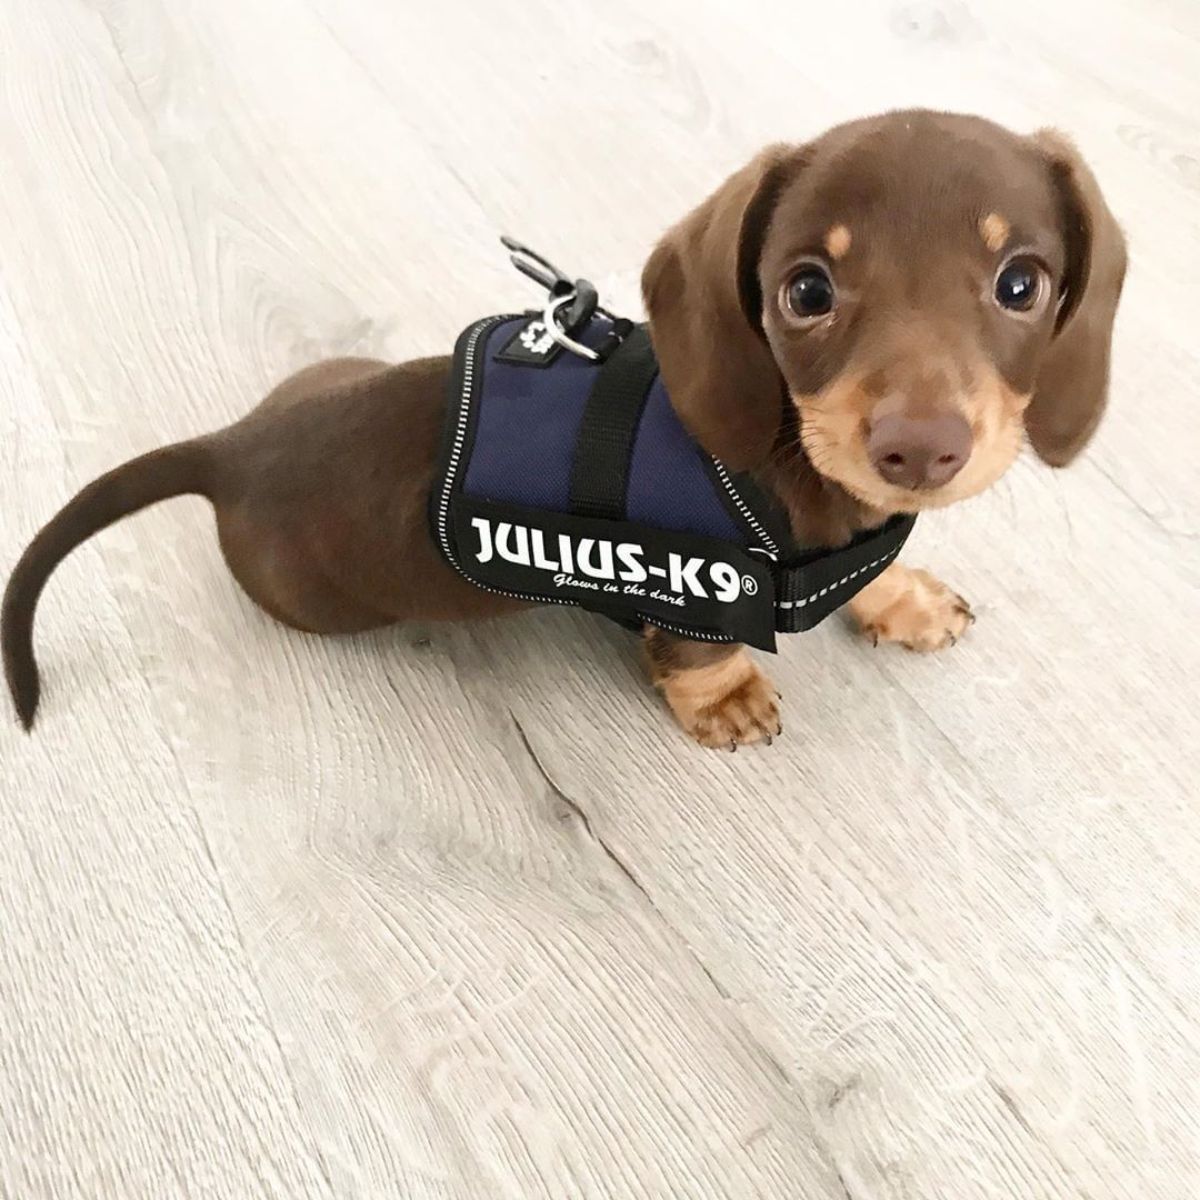 brown dachshund puppy dressed in a k9 vest standing on a wooden floor